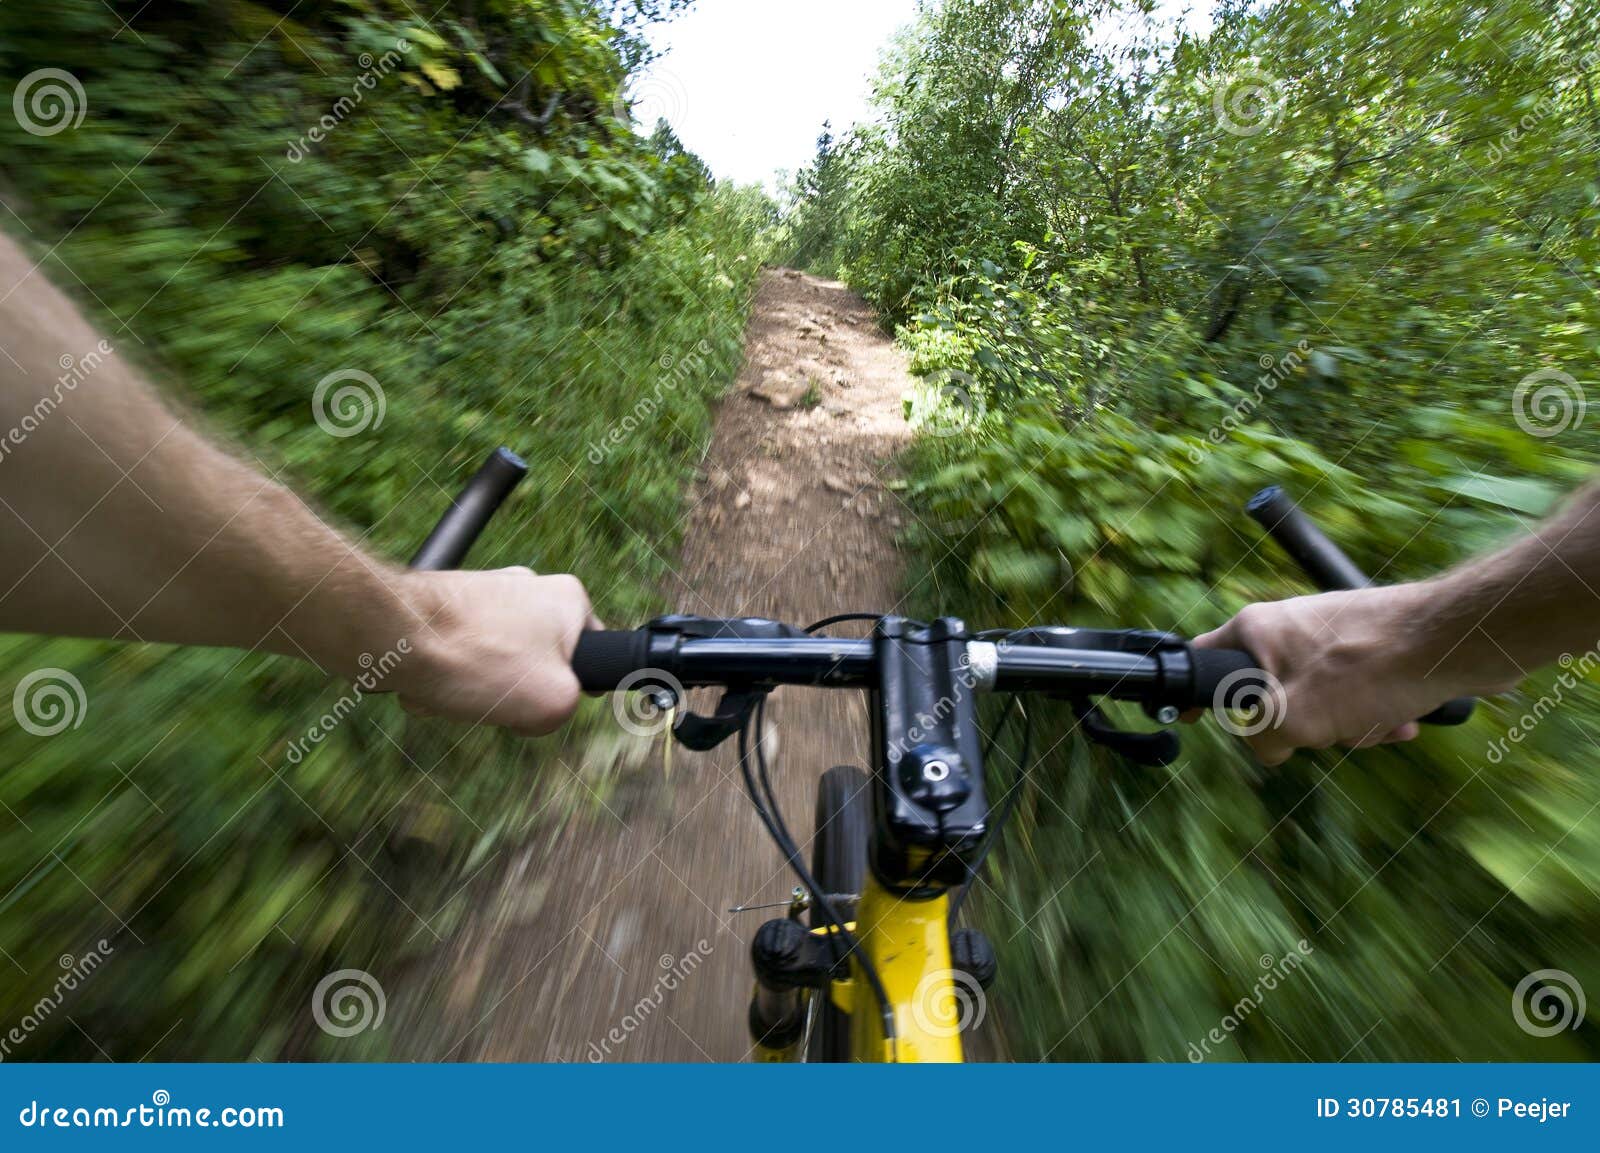 riding mountain bike fast on a trail